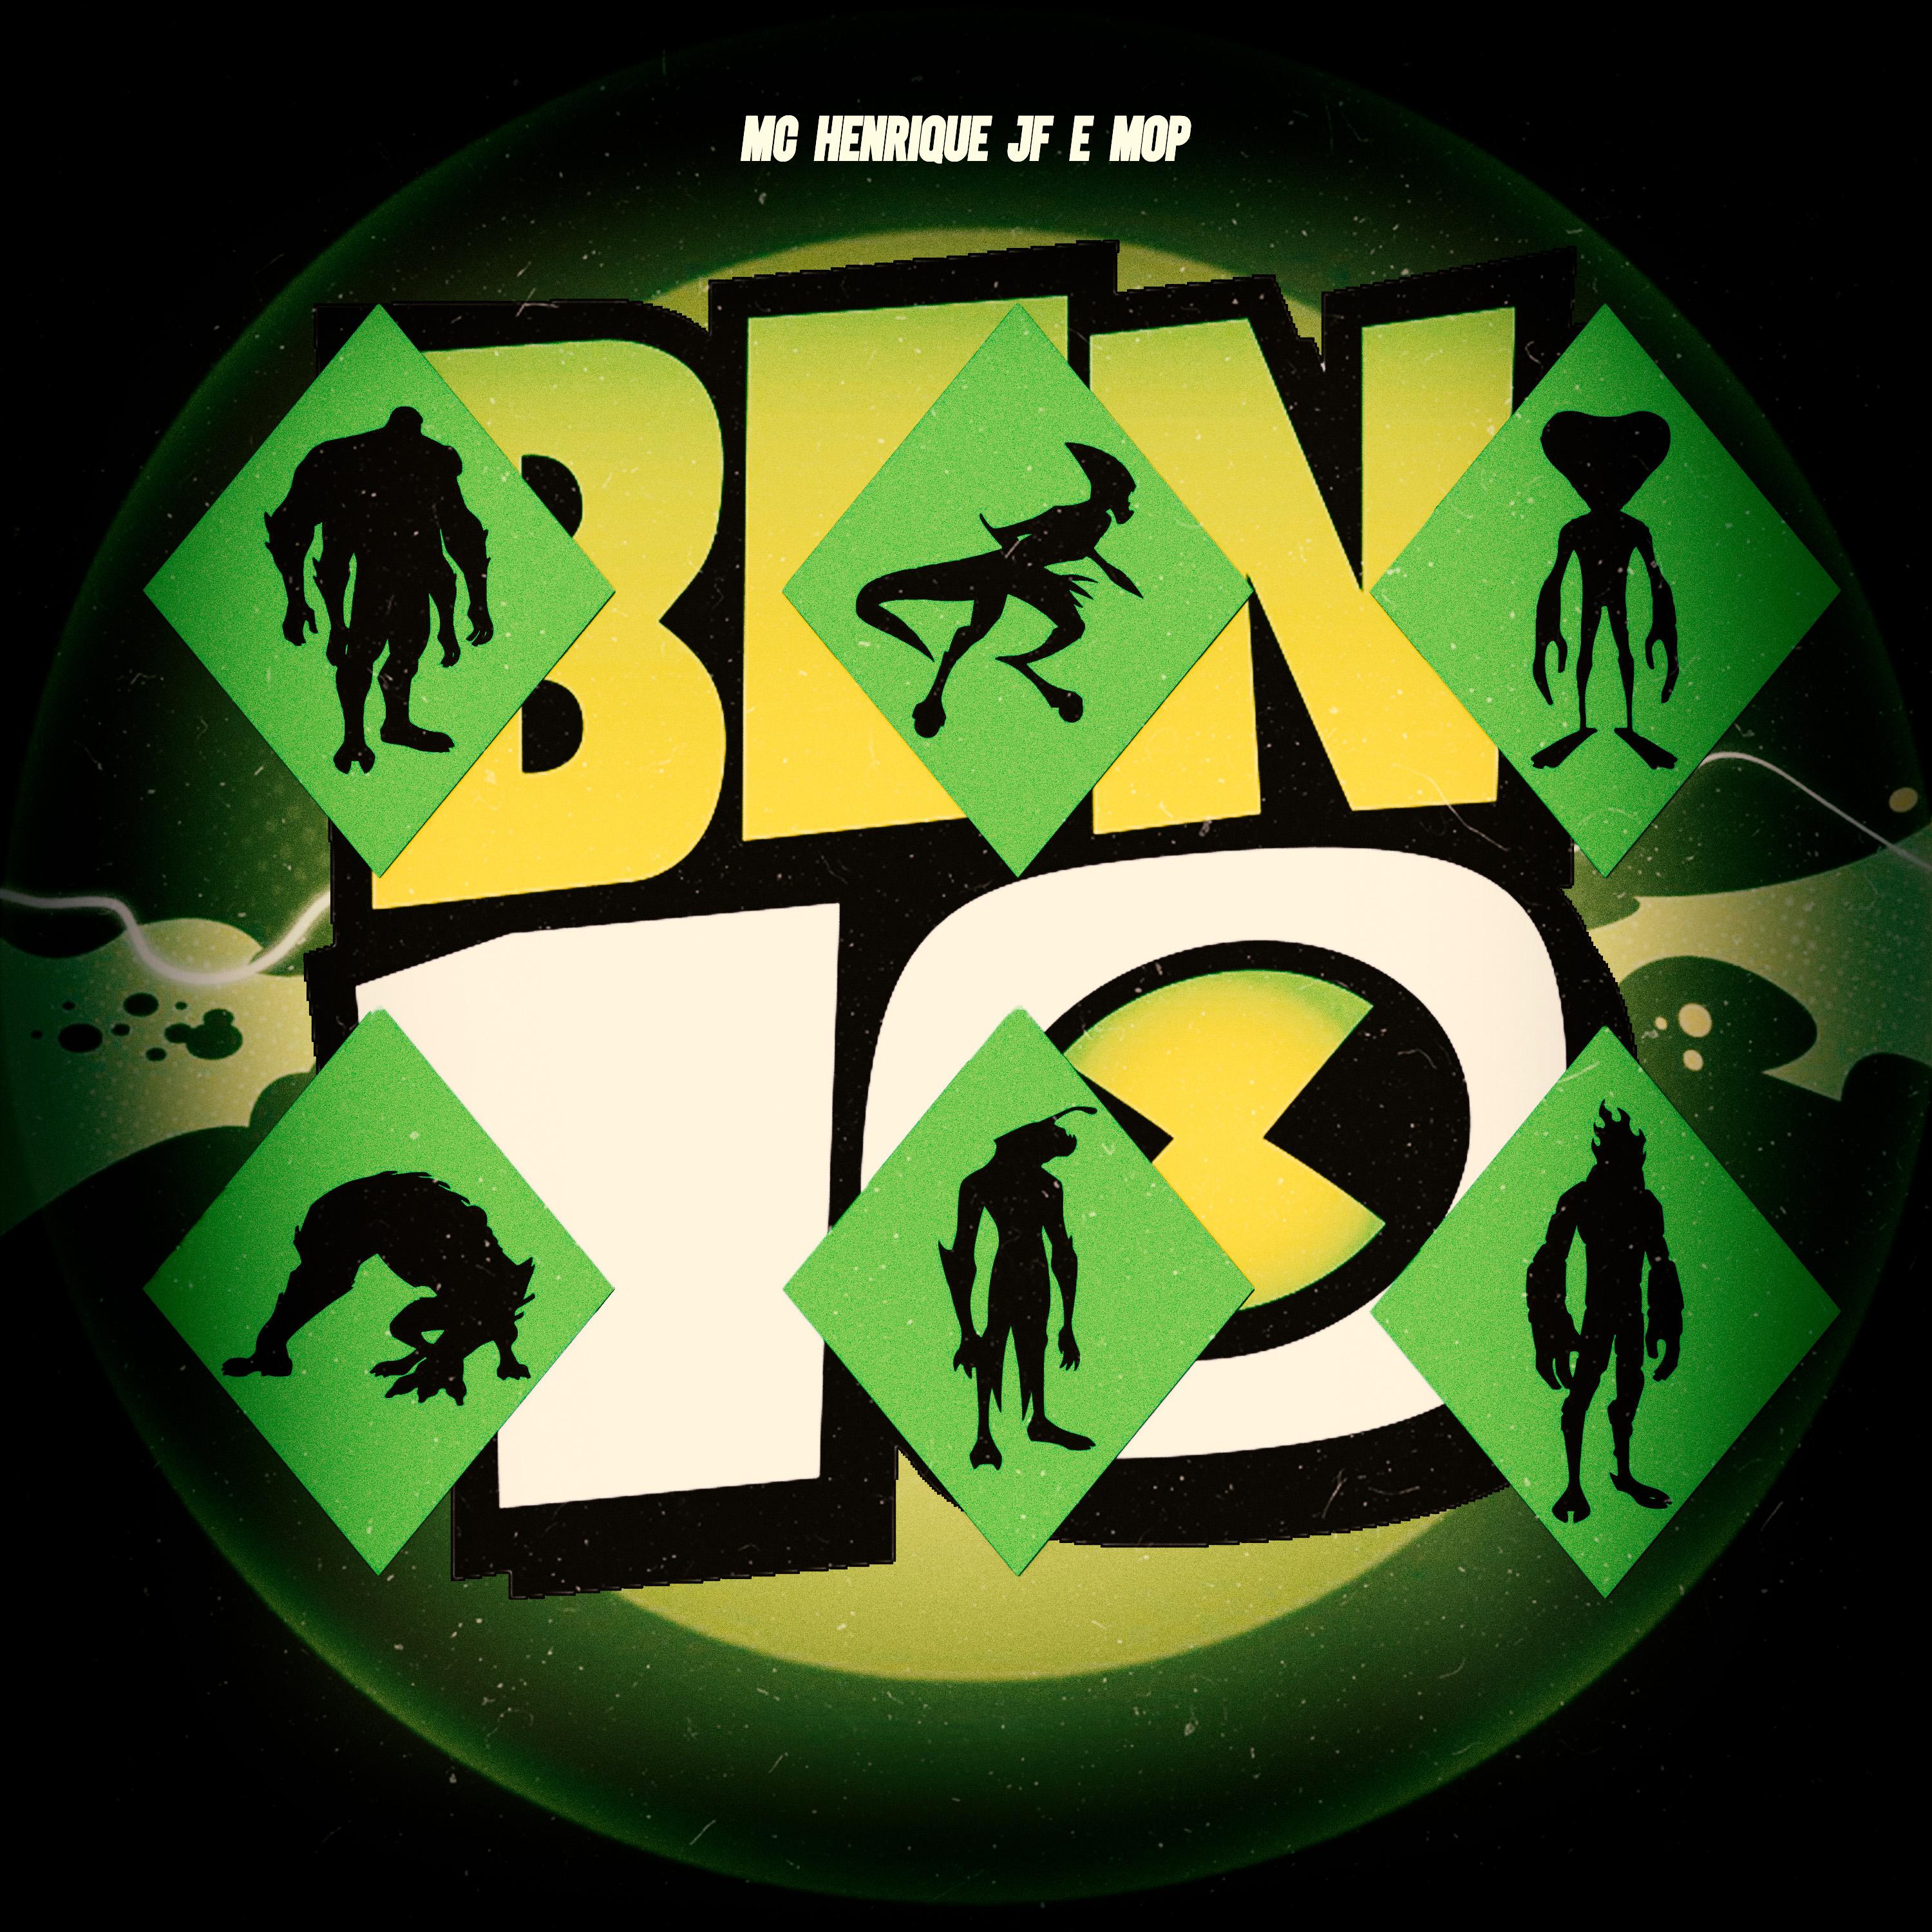 Постер альбома Ben 10